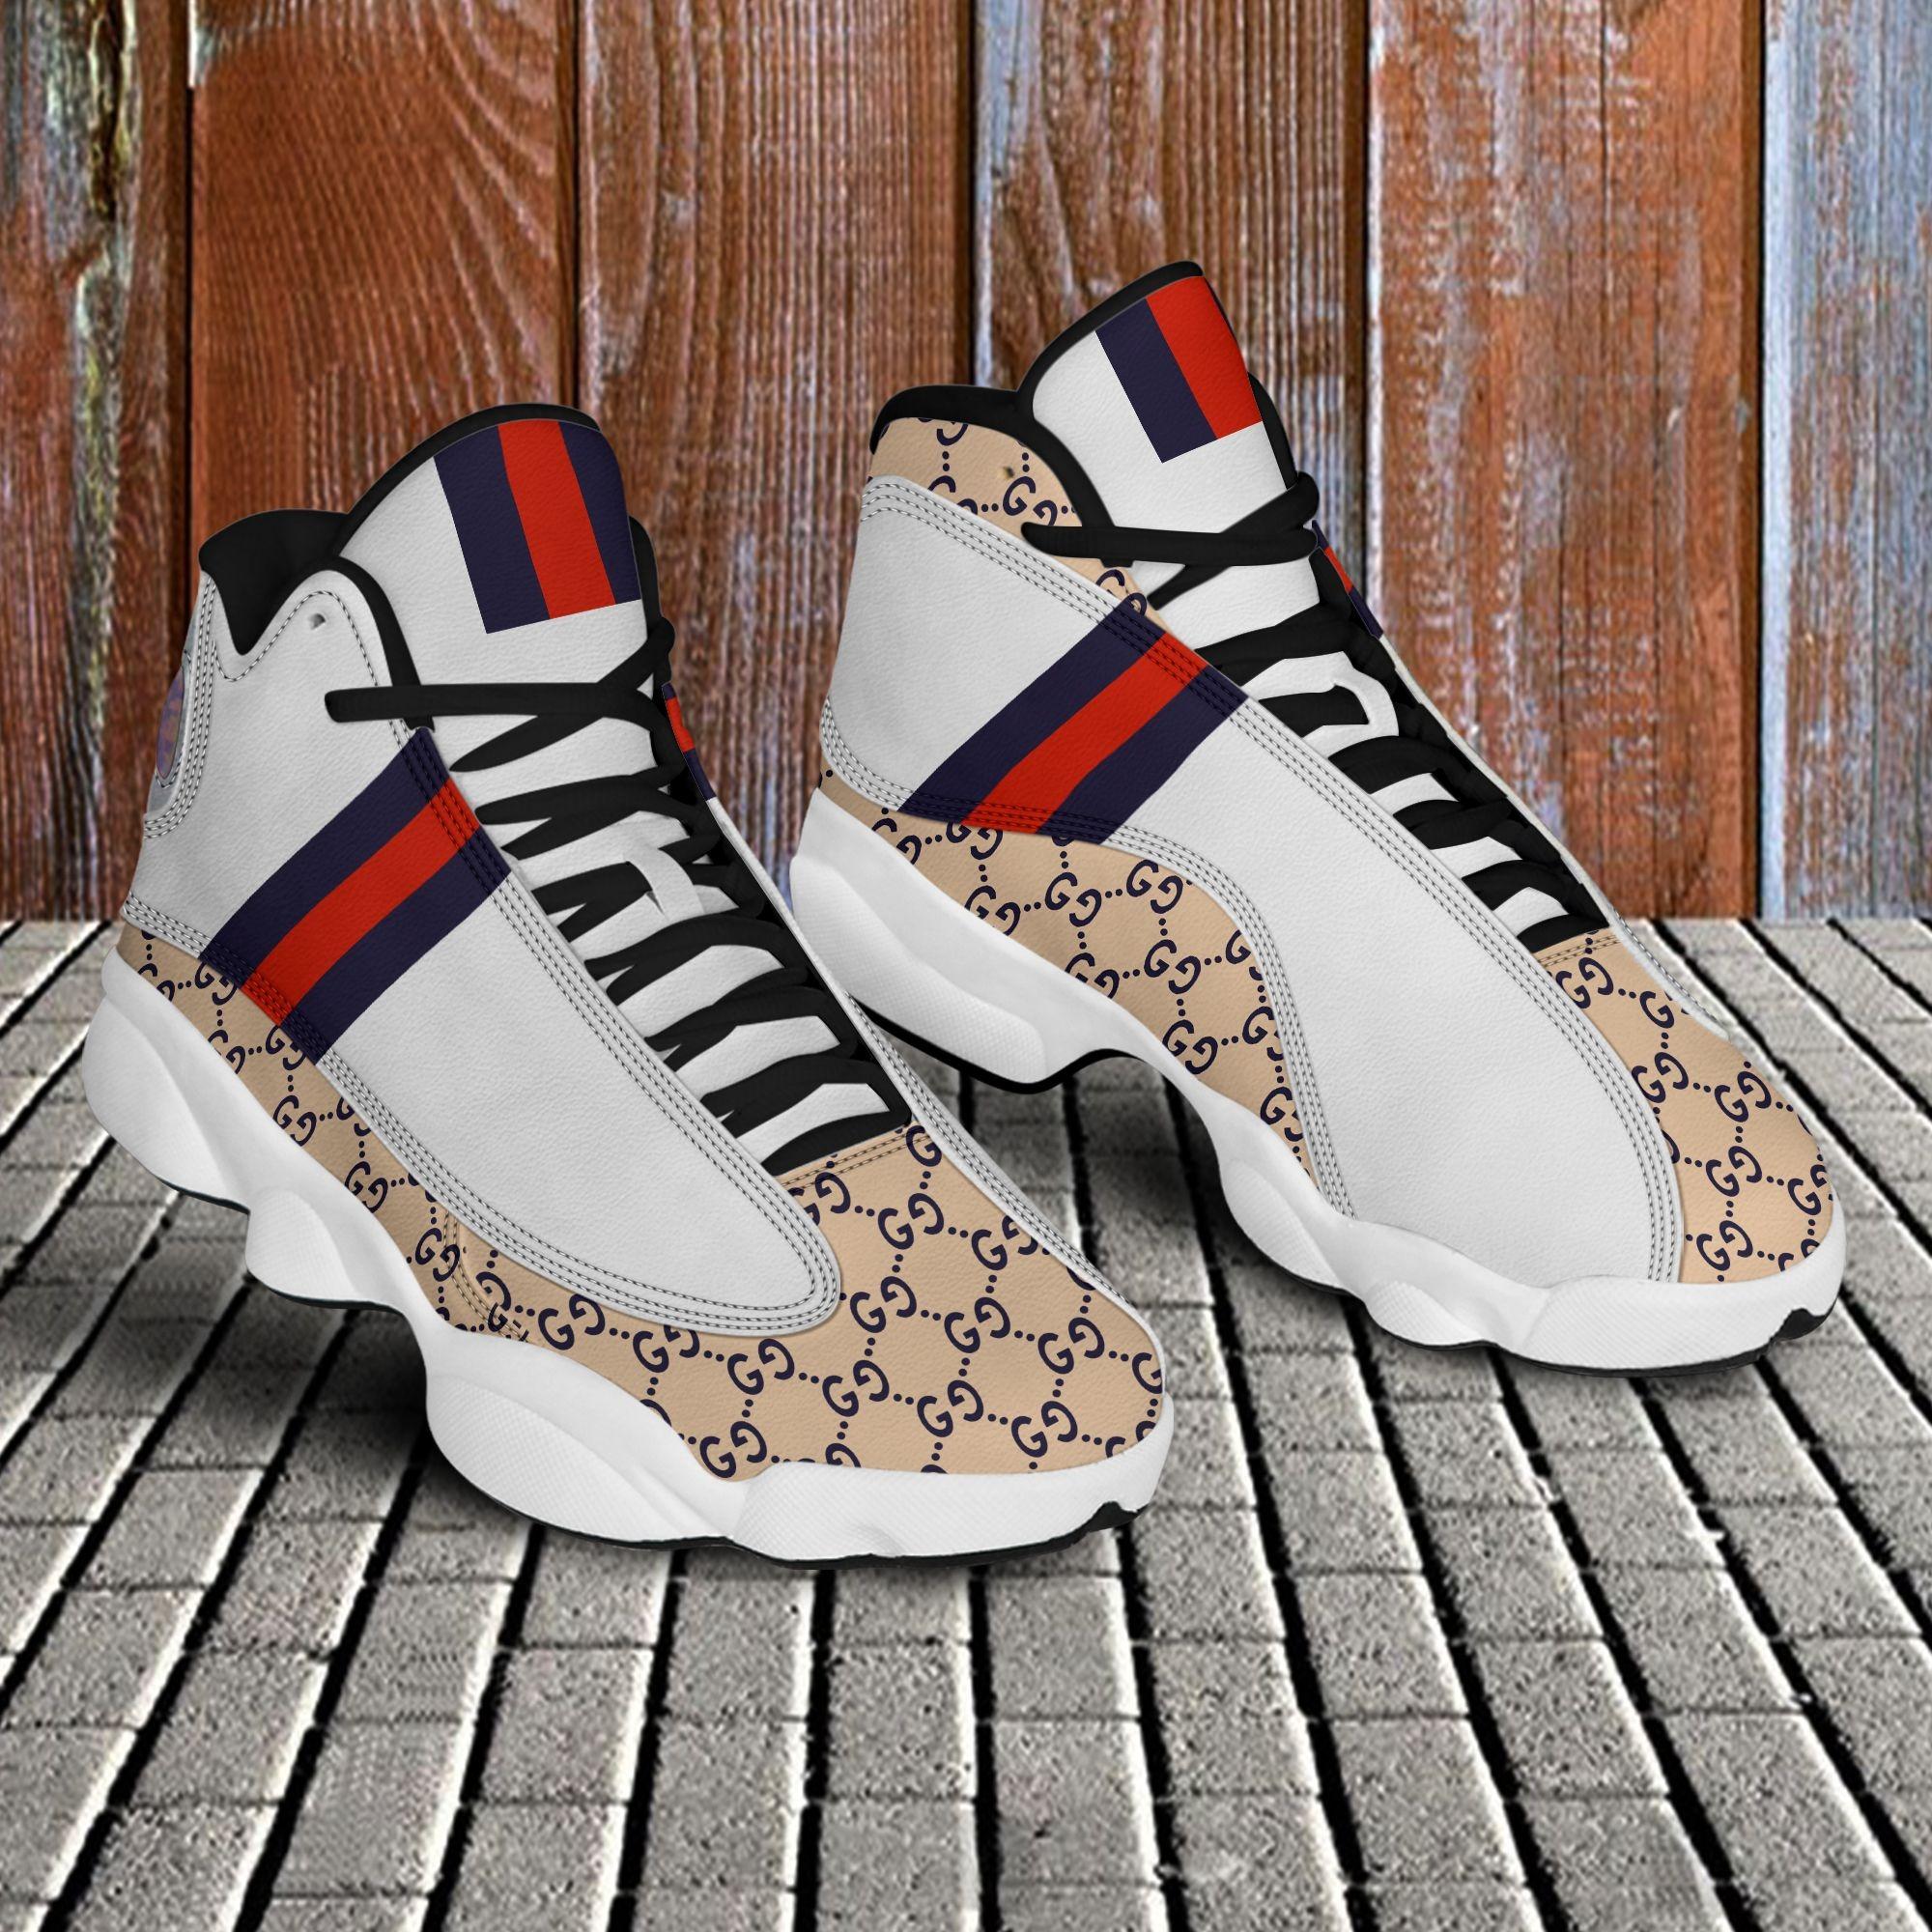 Gucci Air Jordan 13 Sneaker D2304 JD14032 – Let the colors inspire